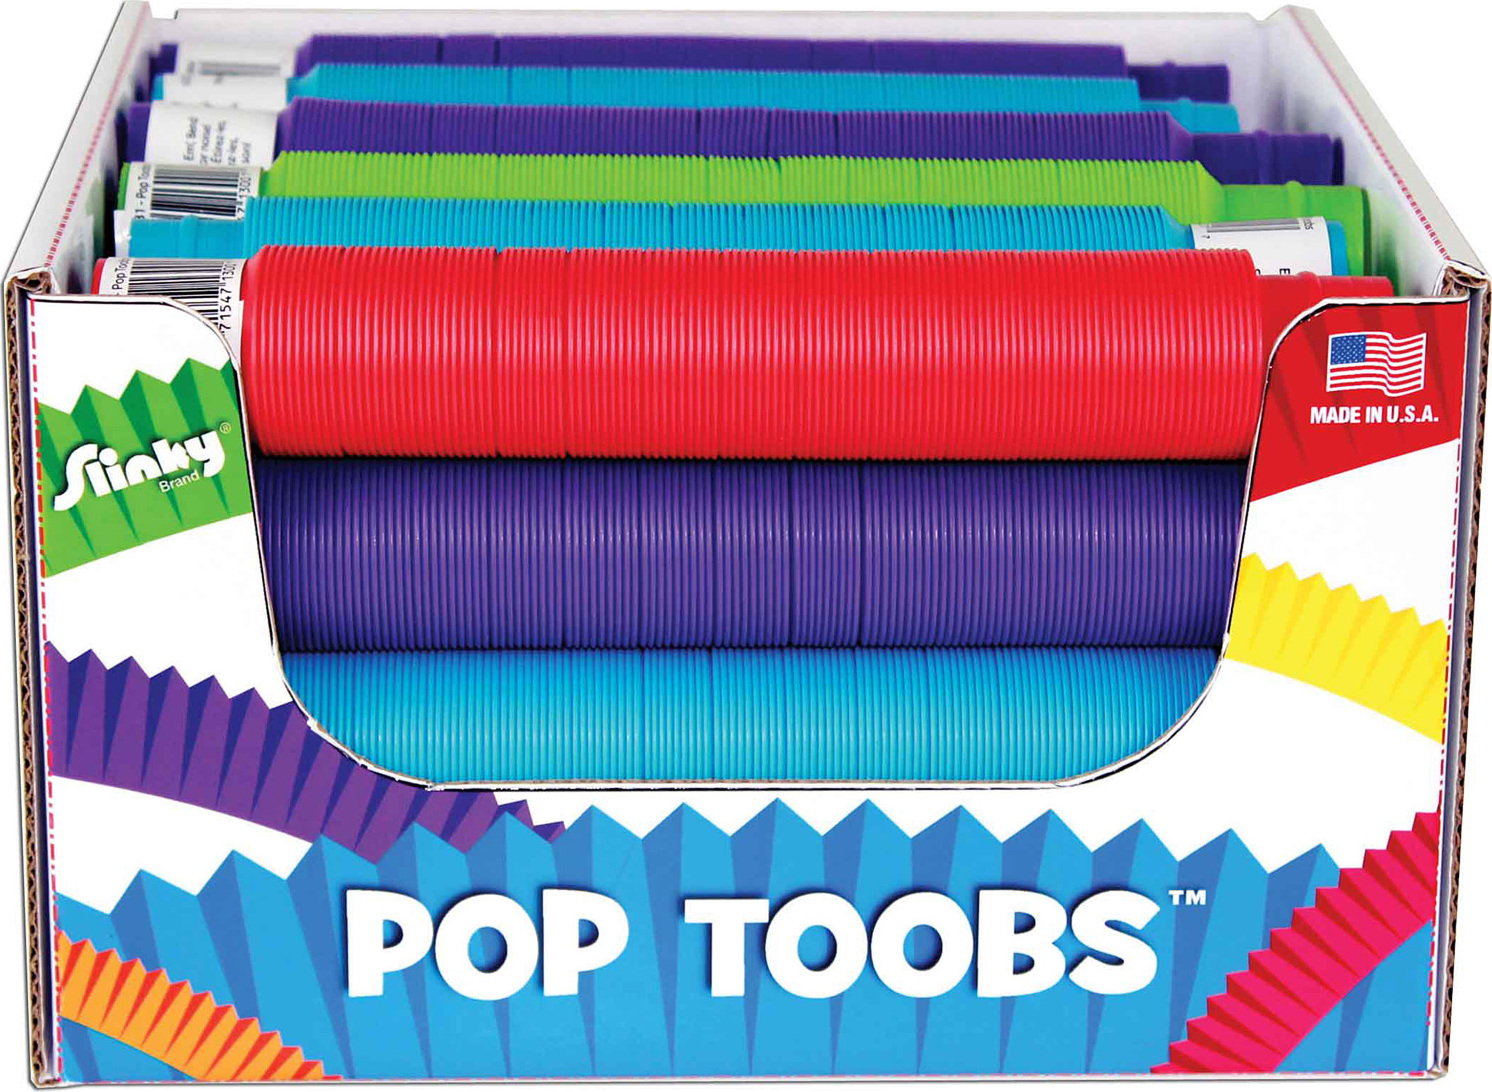 Slinky Pop Tubes - Tutoring Toy